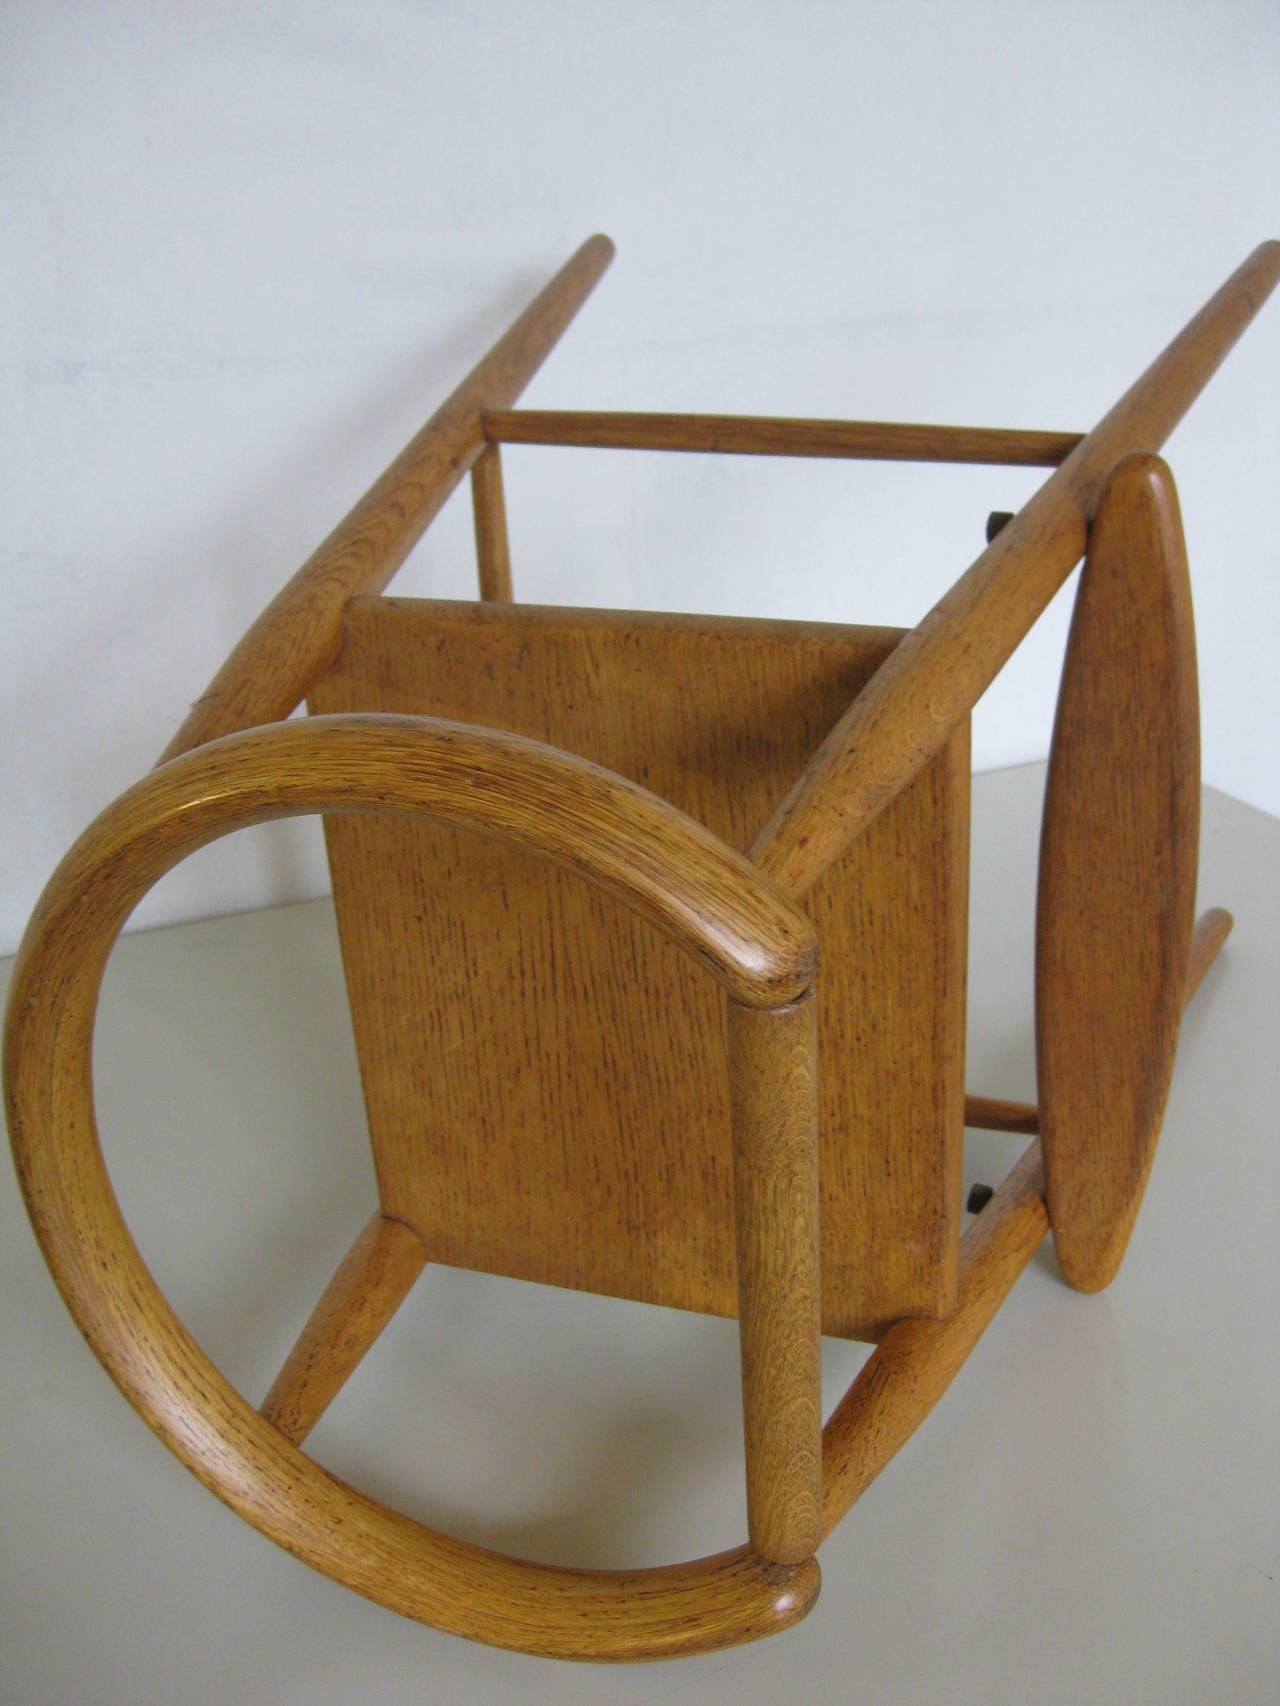 Very nice children's chair by Nanna Ditzel.
Oakwood
adjustable footrest
manufactured by Kold Savvaerk, Denmark.